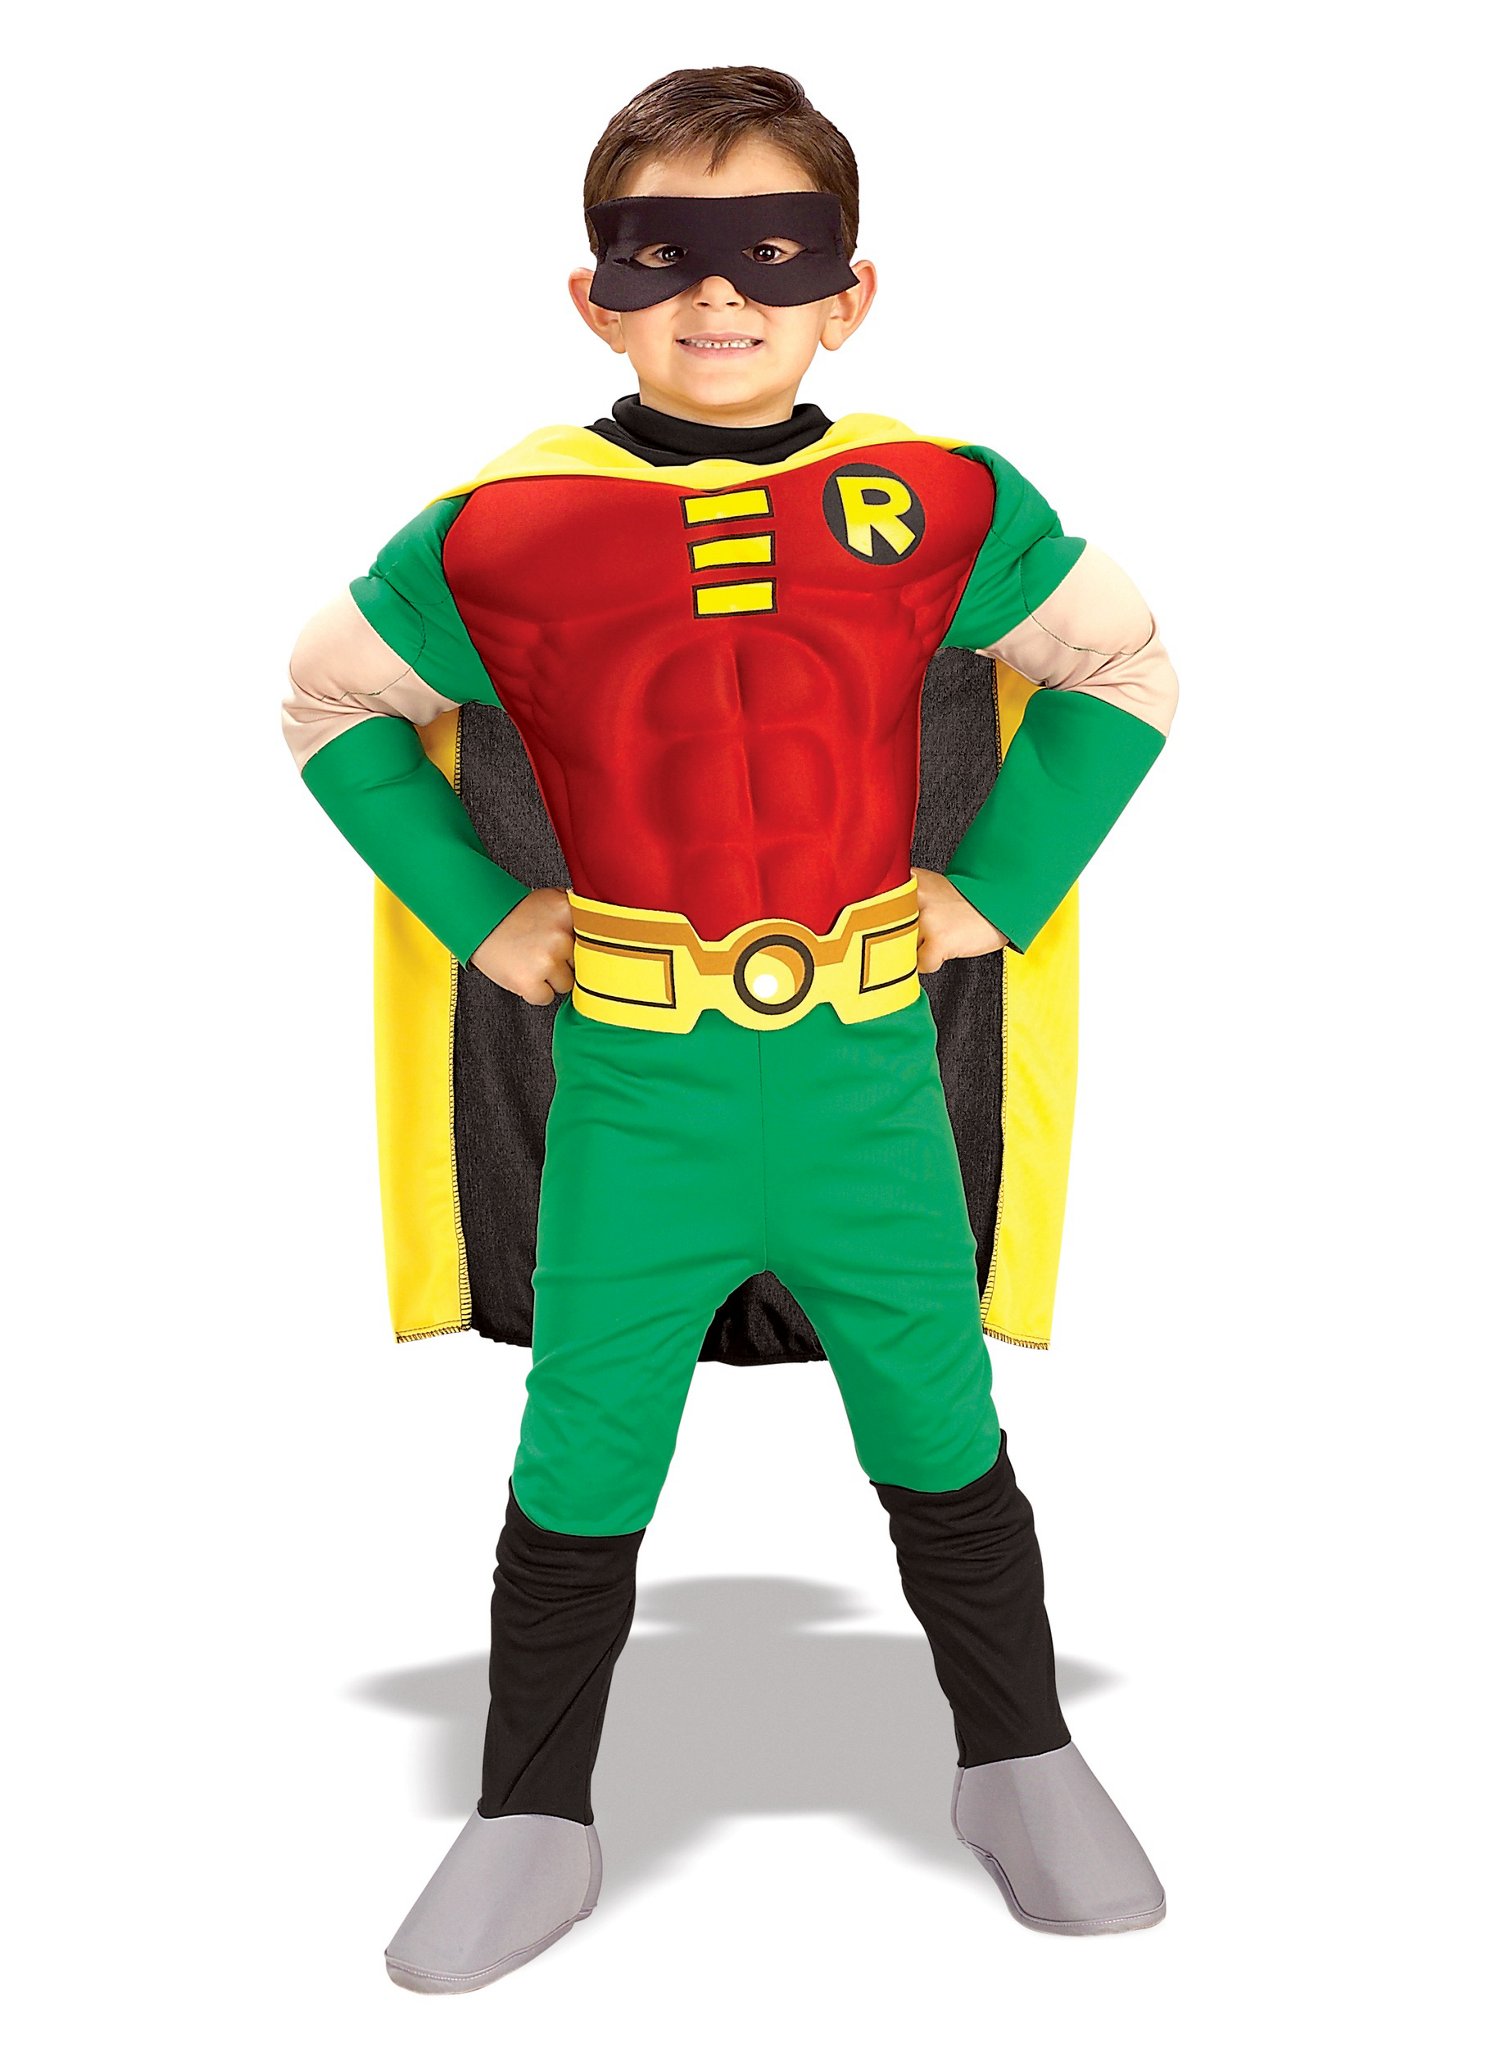 https://i.mmo.cm/is/image/mmoimg/mmo-markets/300302-original-batman-robin-kinderkostuem-child-costume.jpg